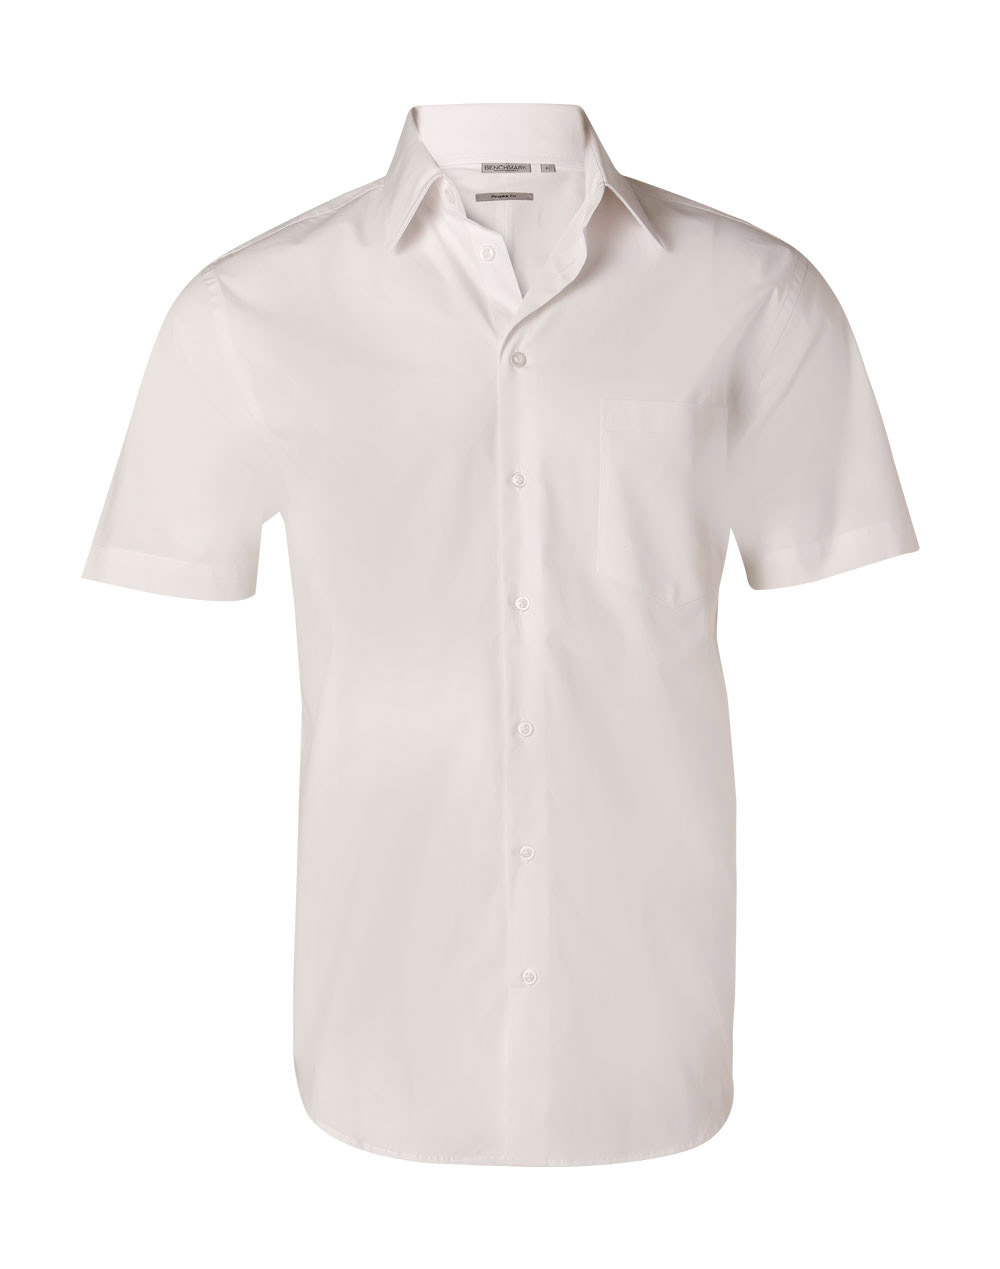 M7020S/M7020L Men’s Cotton/Poly Stretch Short Sleeve Shirt